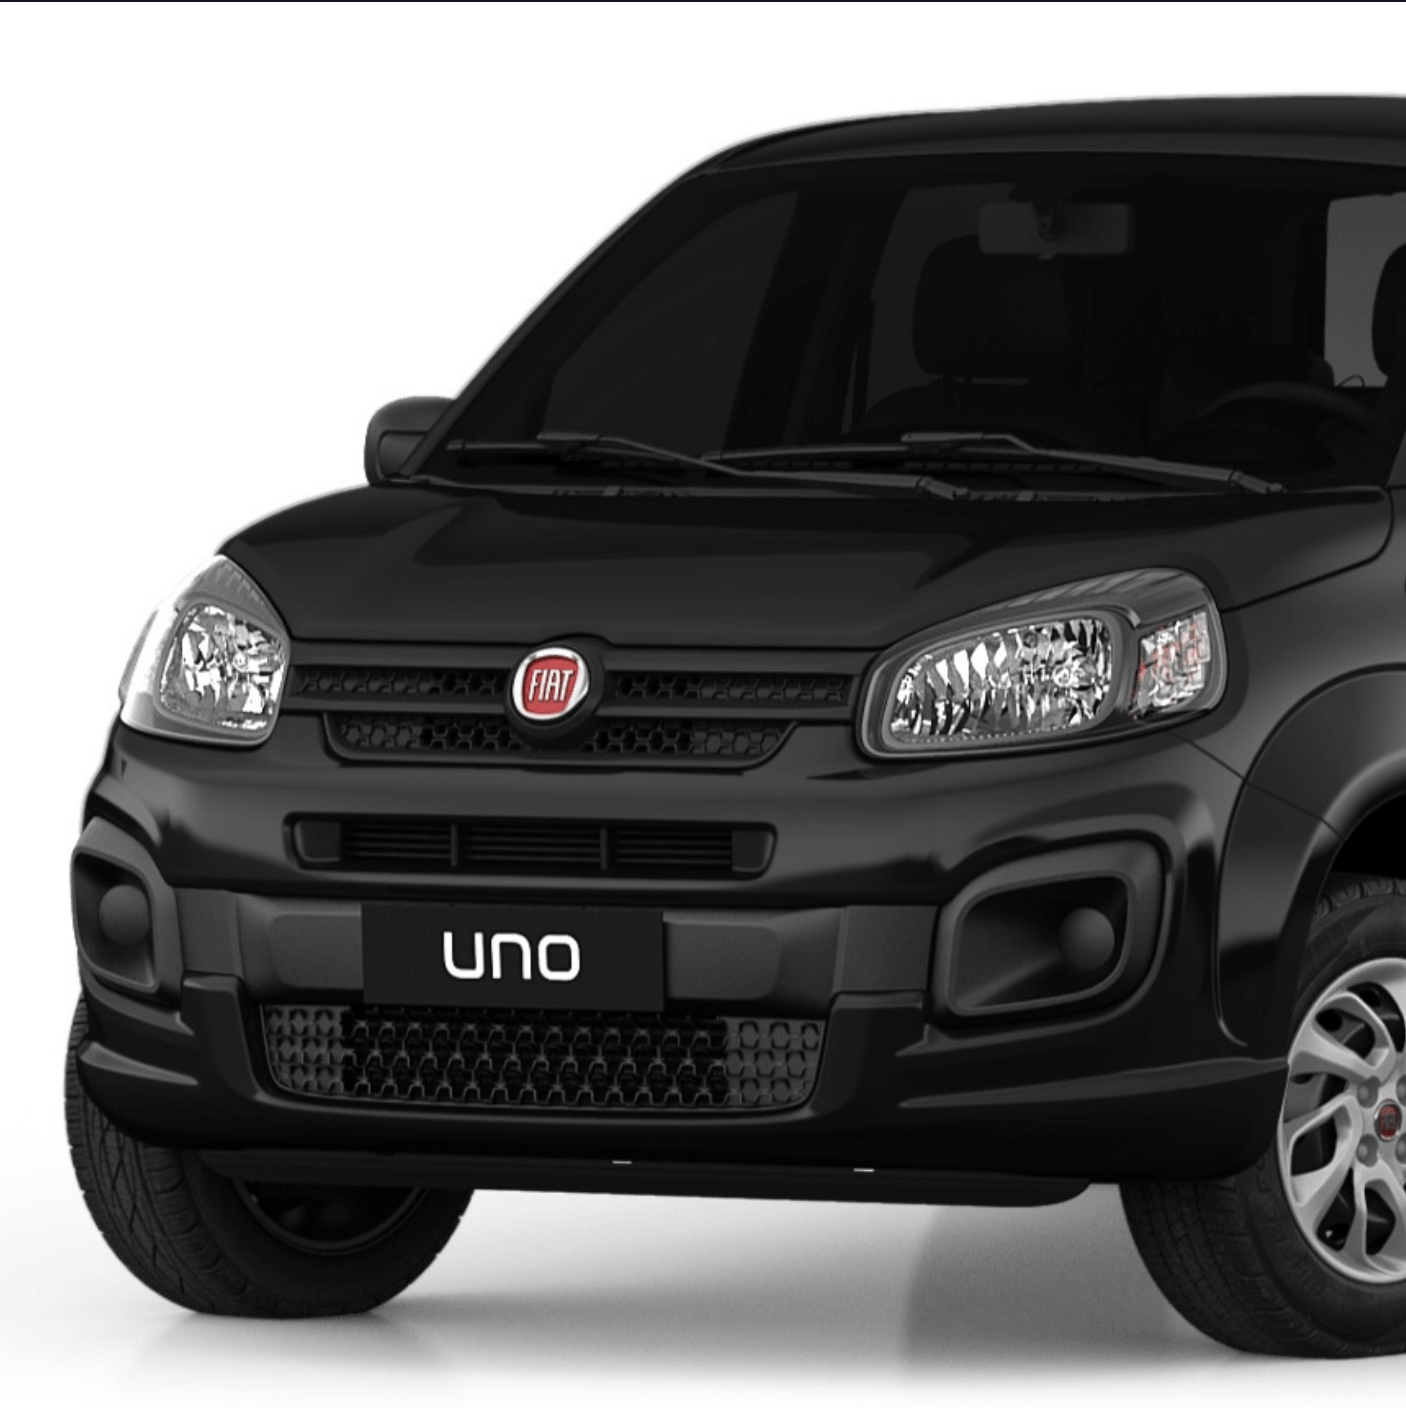 Versão Way dá status inédito ao Fiat Uno :: .